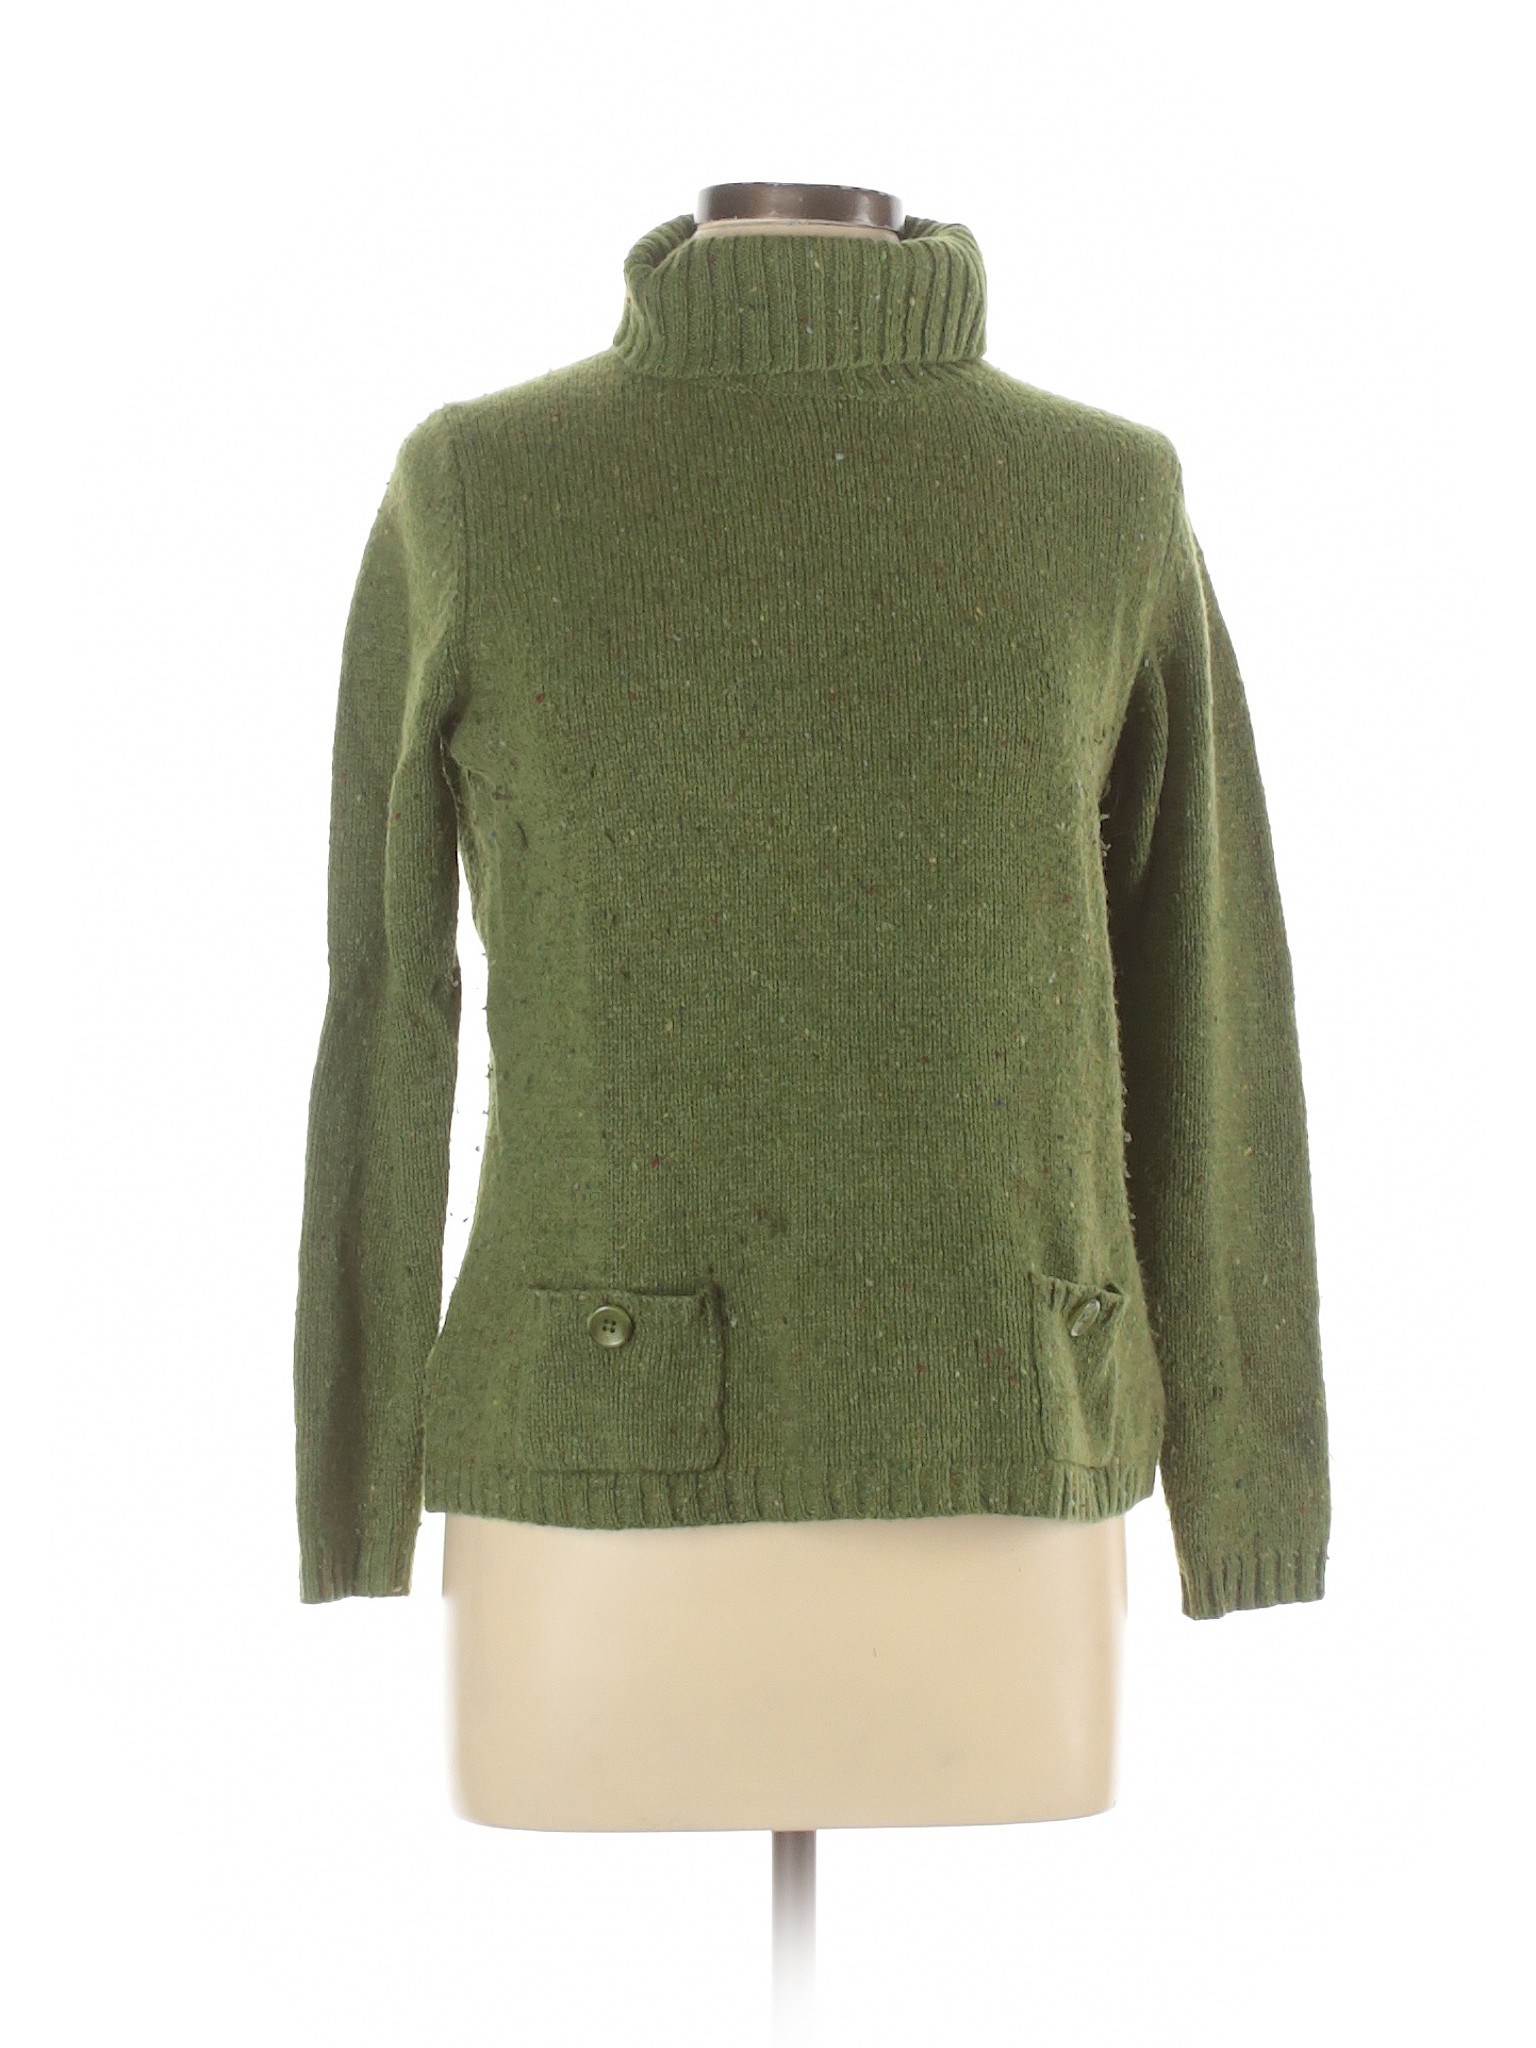 Eddie Bauer Women Green Wool Pullover Sweater L Petites | eBay